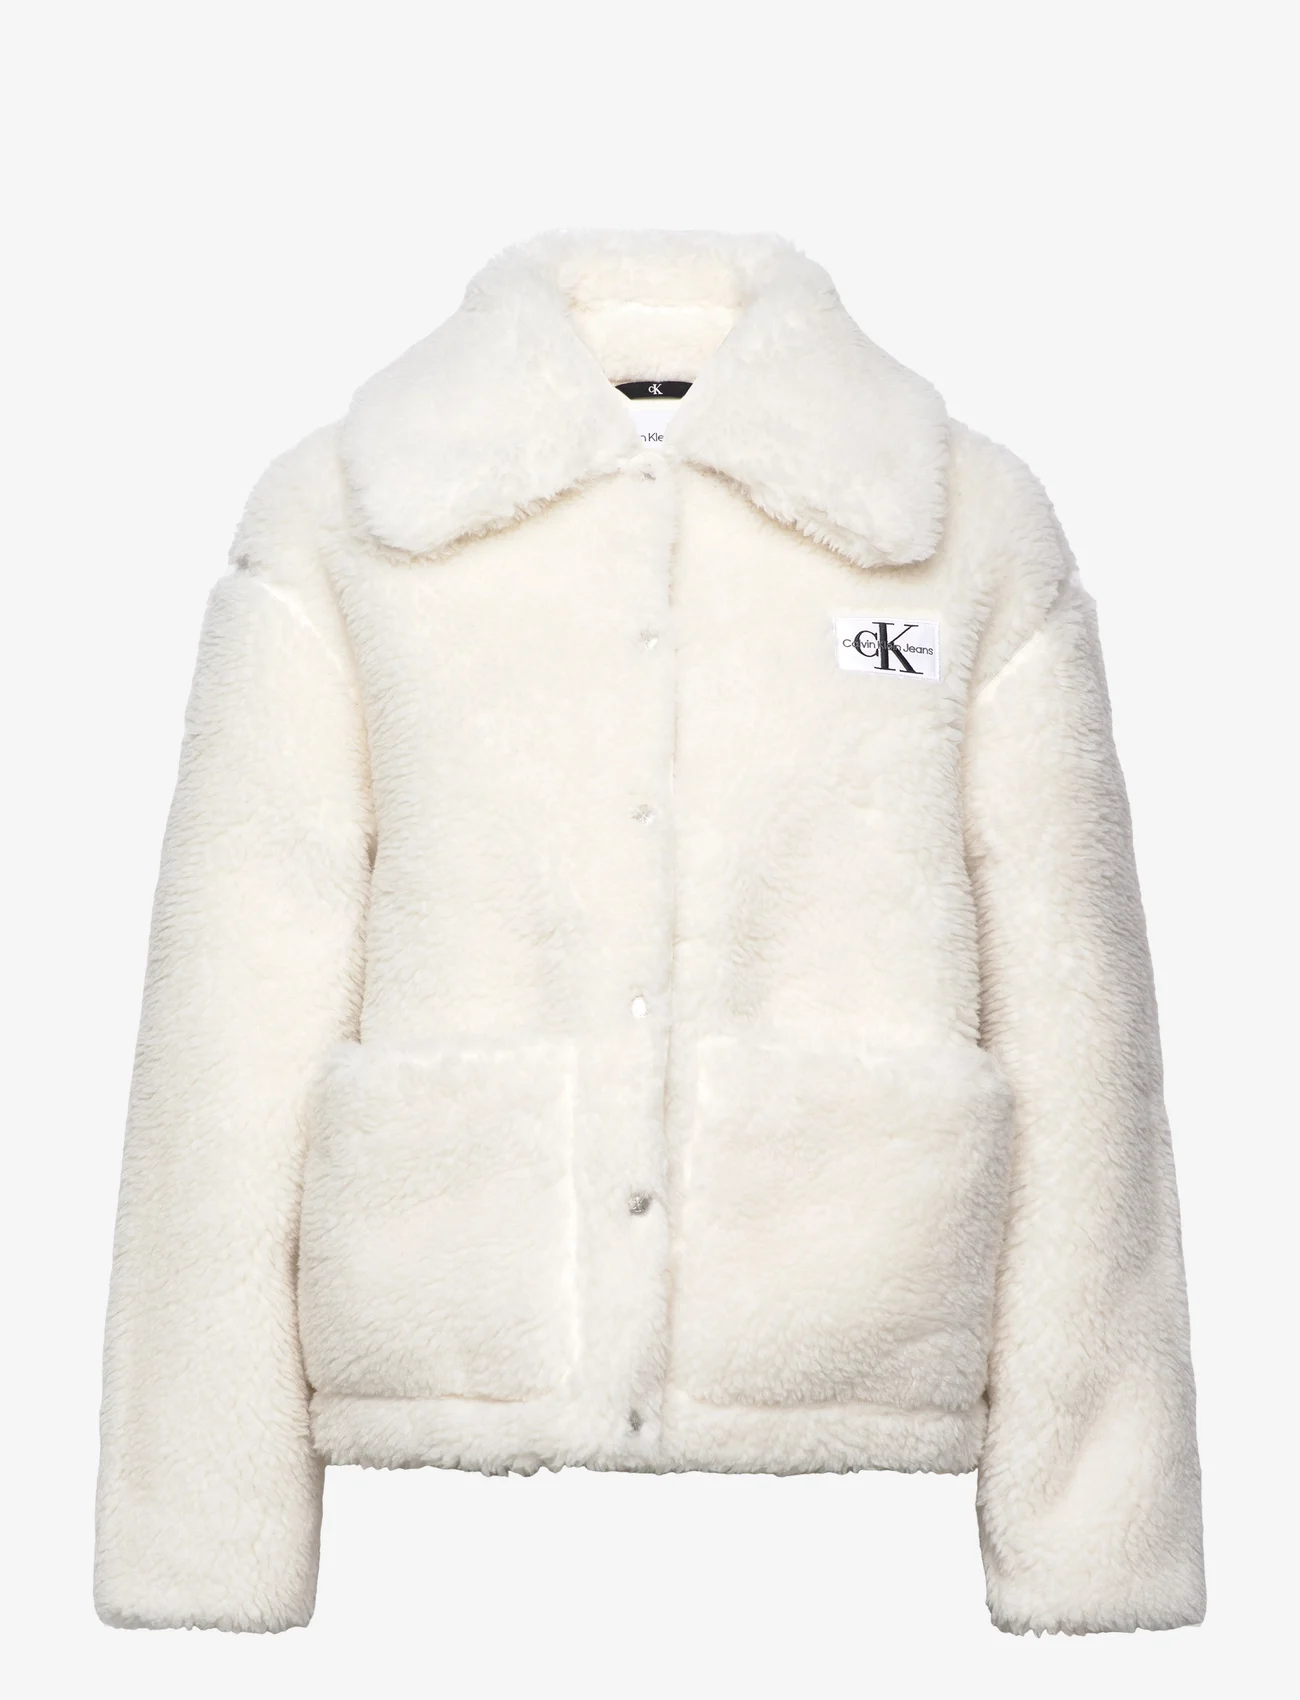 Calvin Klein Jeans - SHORT SHERPA JACKET - winter jacket - ivory - 0